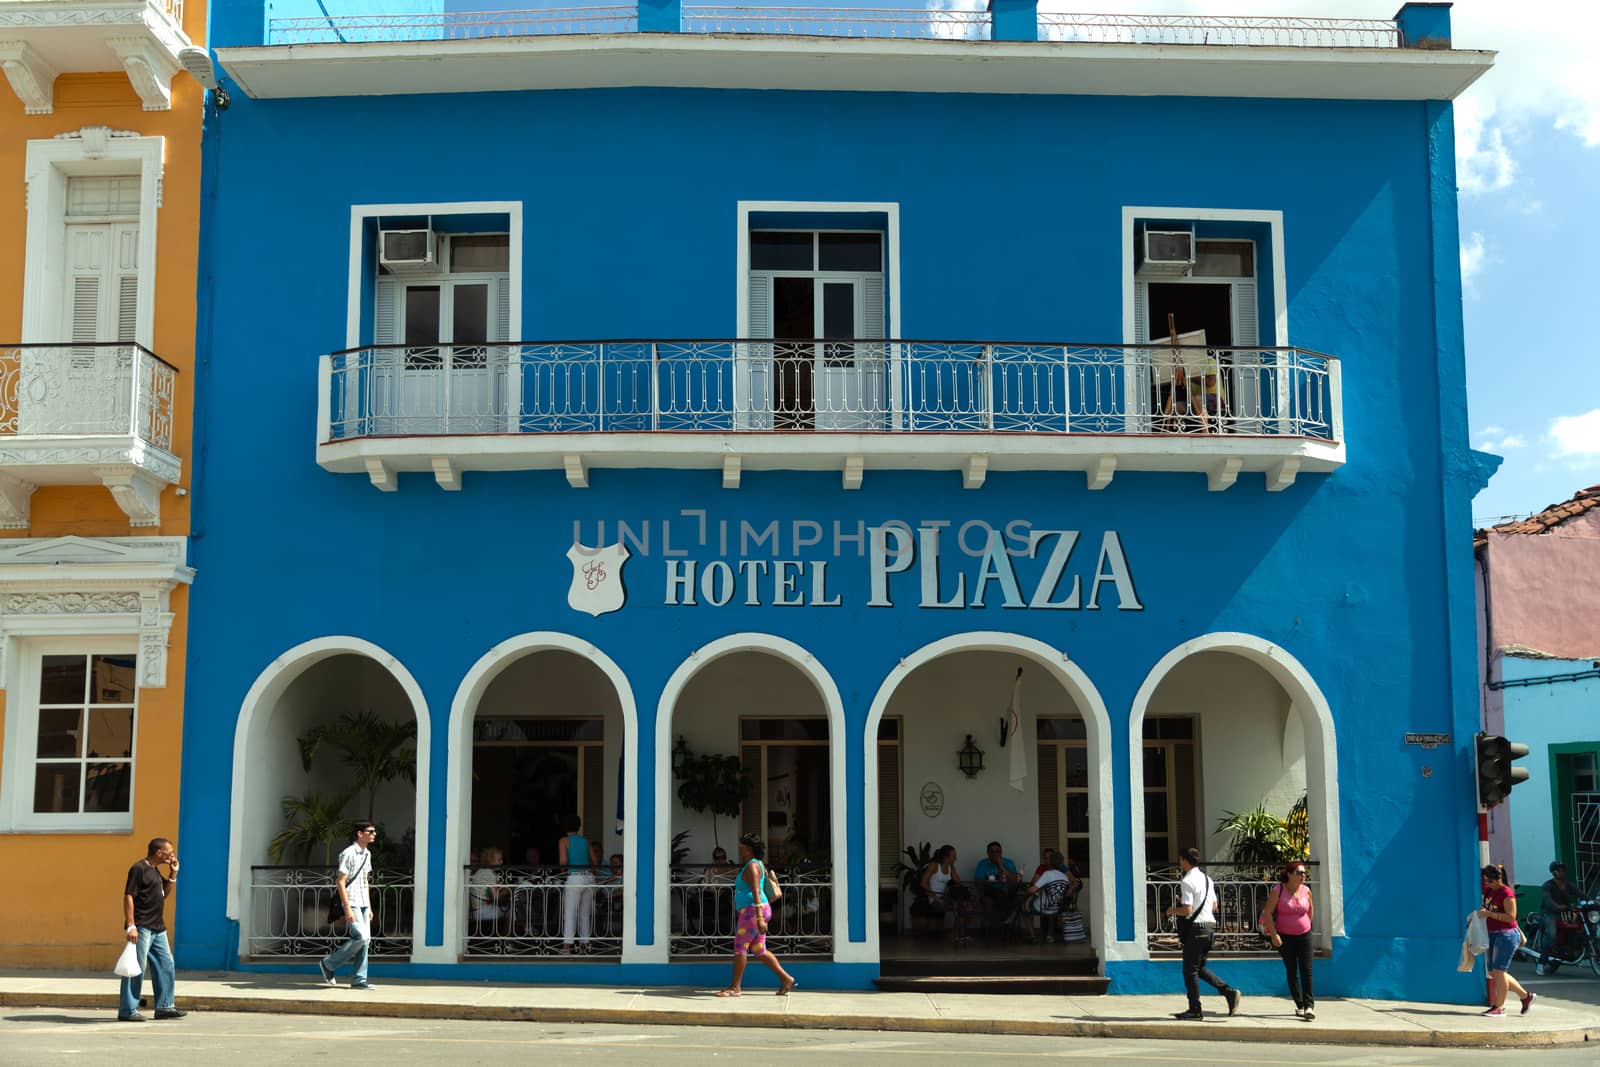 Sancti Spiritus, Cuba - 4 February 2015: Hotel plaza near Parque Serafin Sanchez